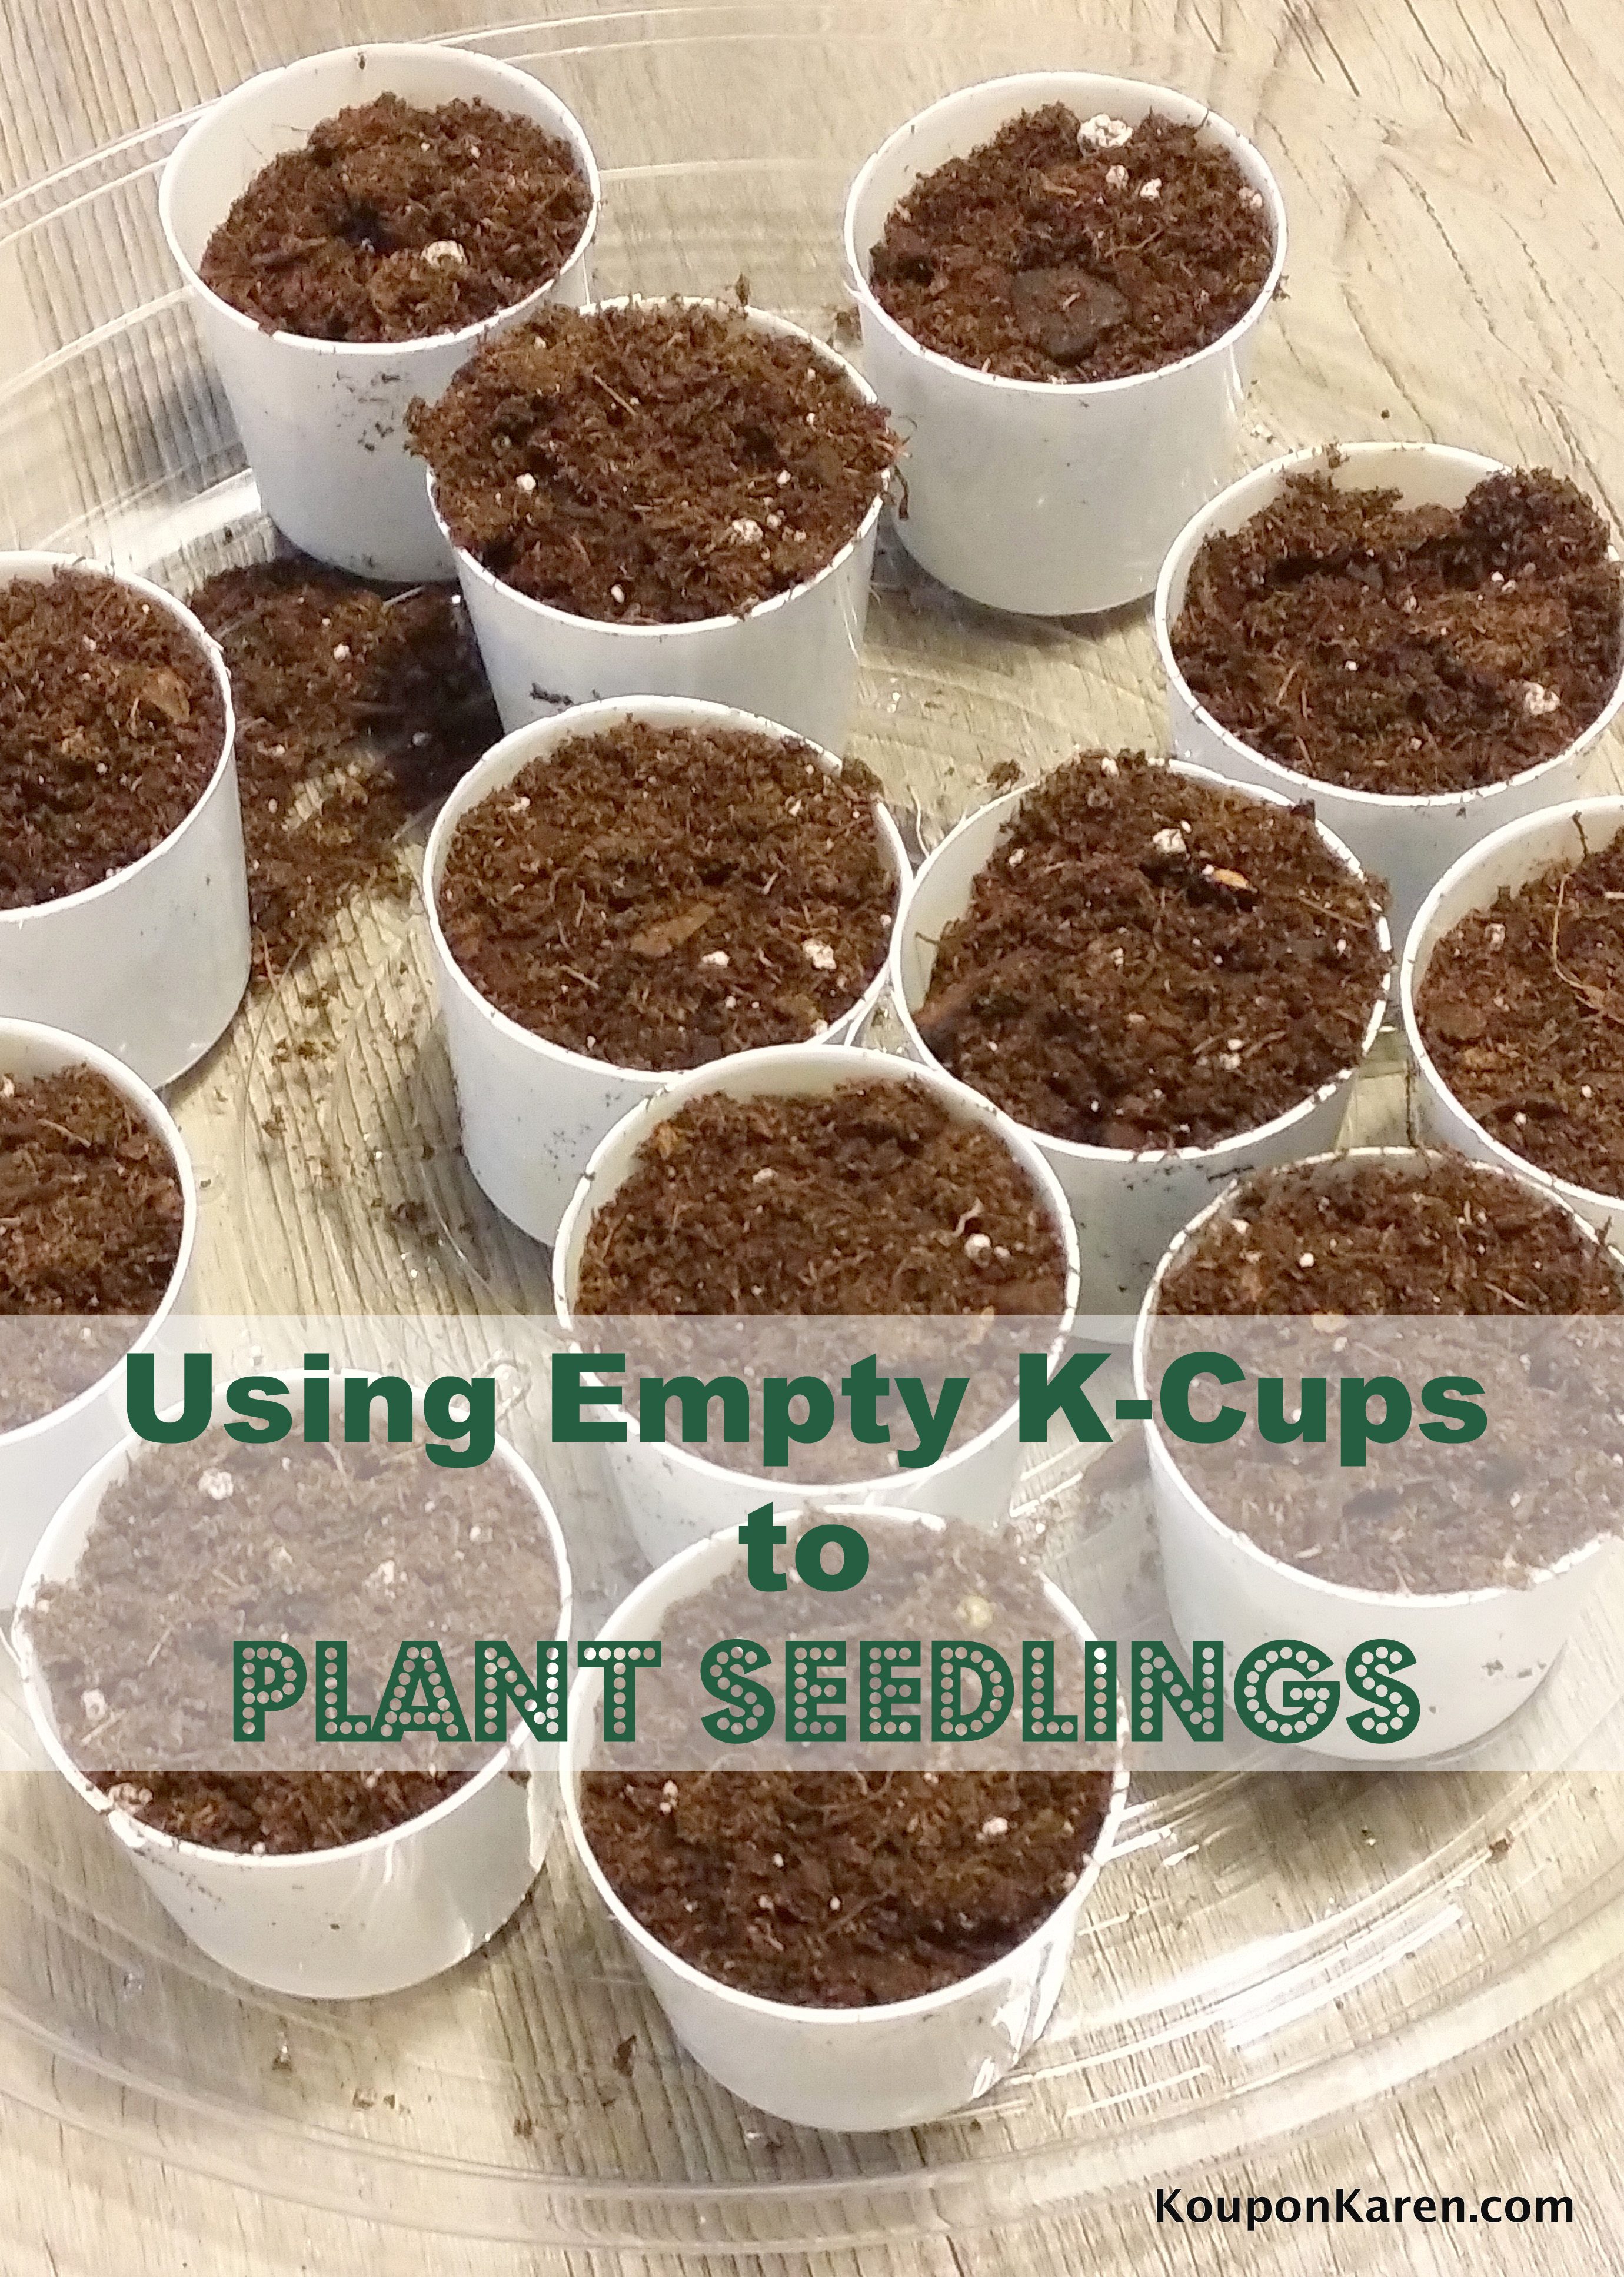 Using Empty K-Cups to Plant Seedlings #BringingInnovation